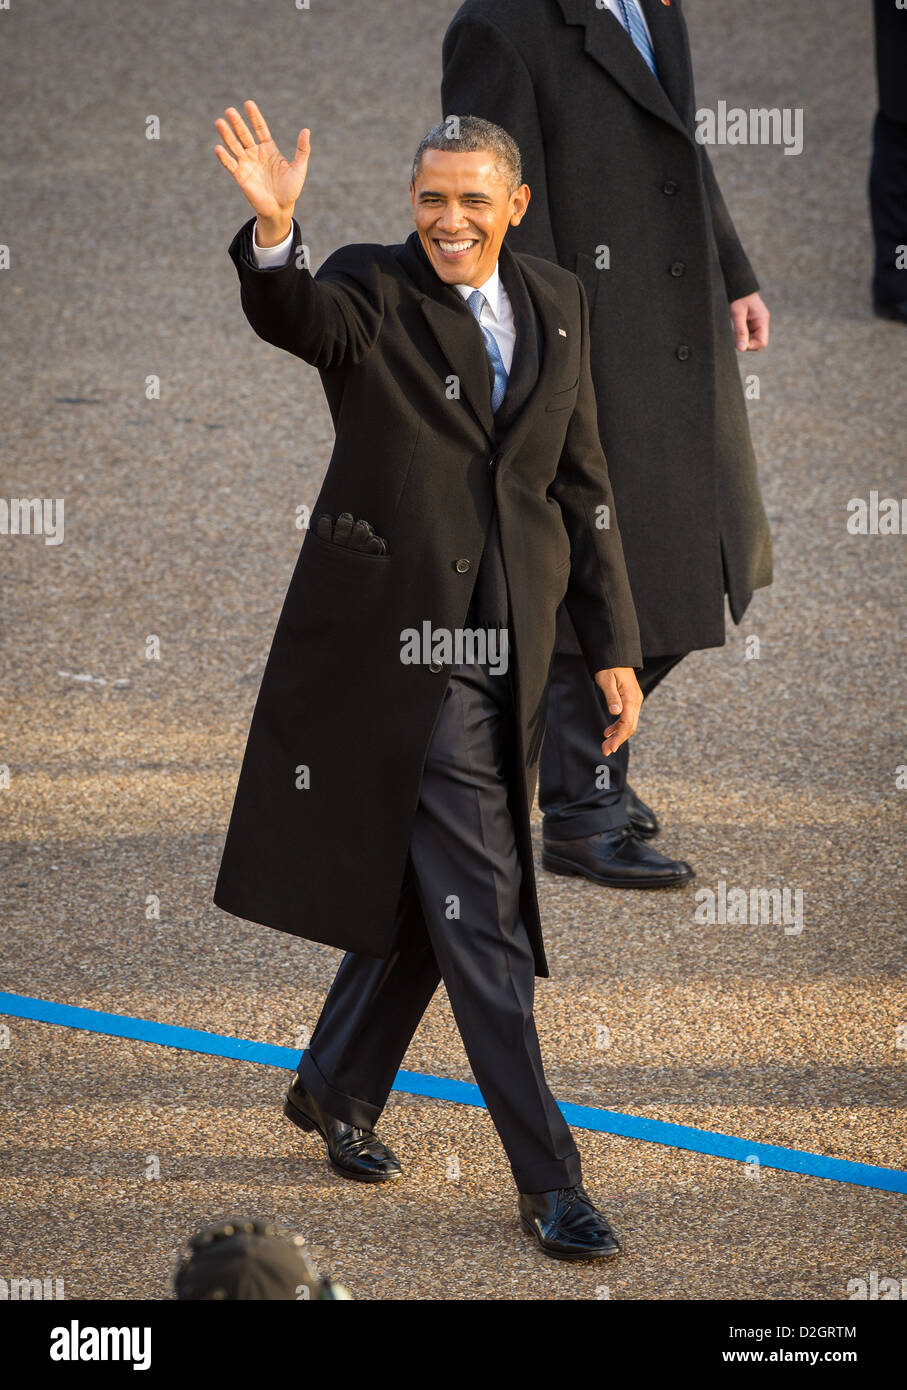 Während der konstituierenden Parade 21. Januar 2013 in Washington, DC "Wellenlinien" US-Präsident Barack Obama als er geht entlang der Pennsylvania Avenue. Obama wurde vereidigt als 44. Präsident der Nation früher in den Tag. Stockfoto